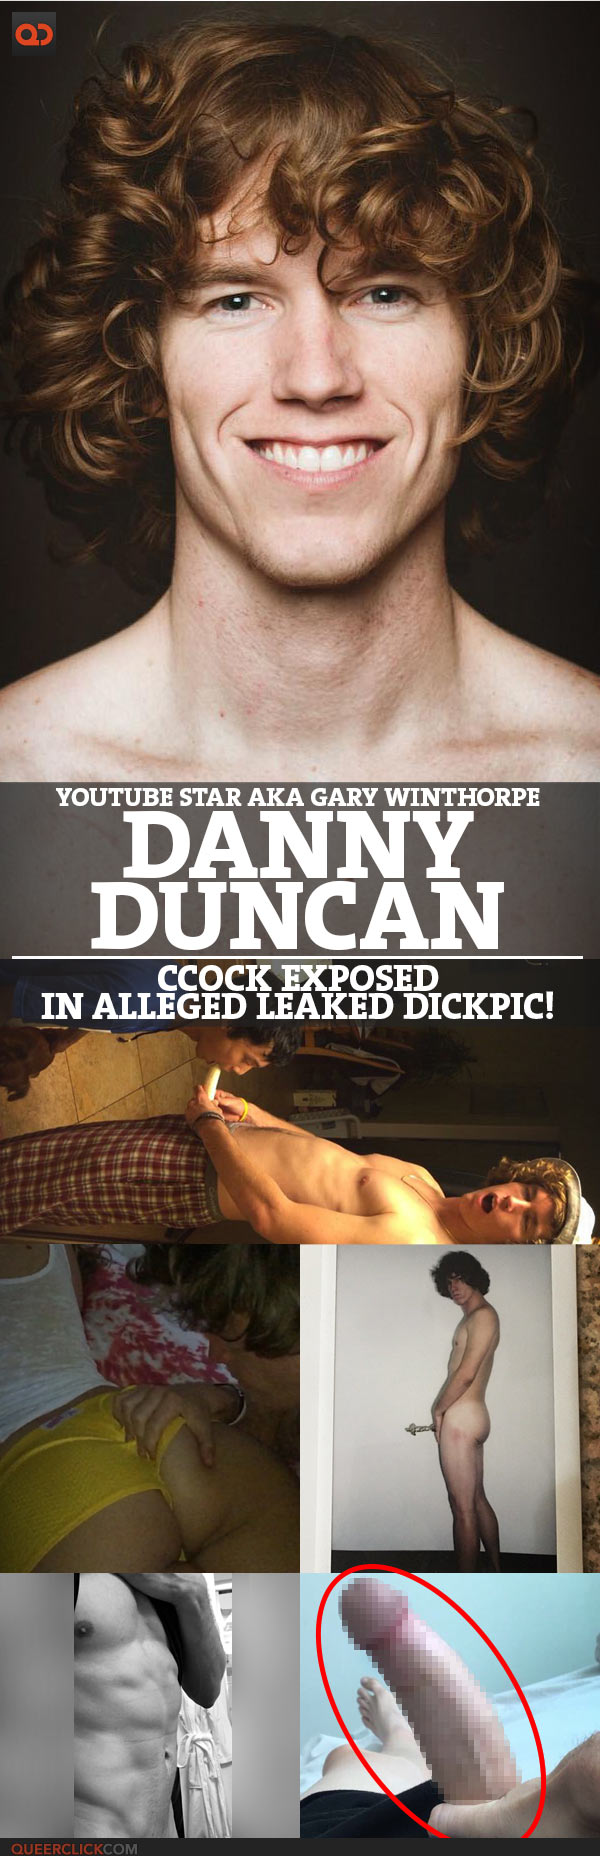 Danny duncan leaked